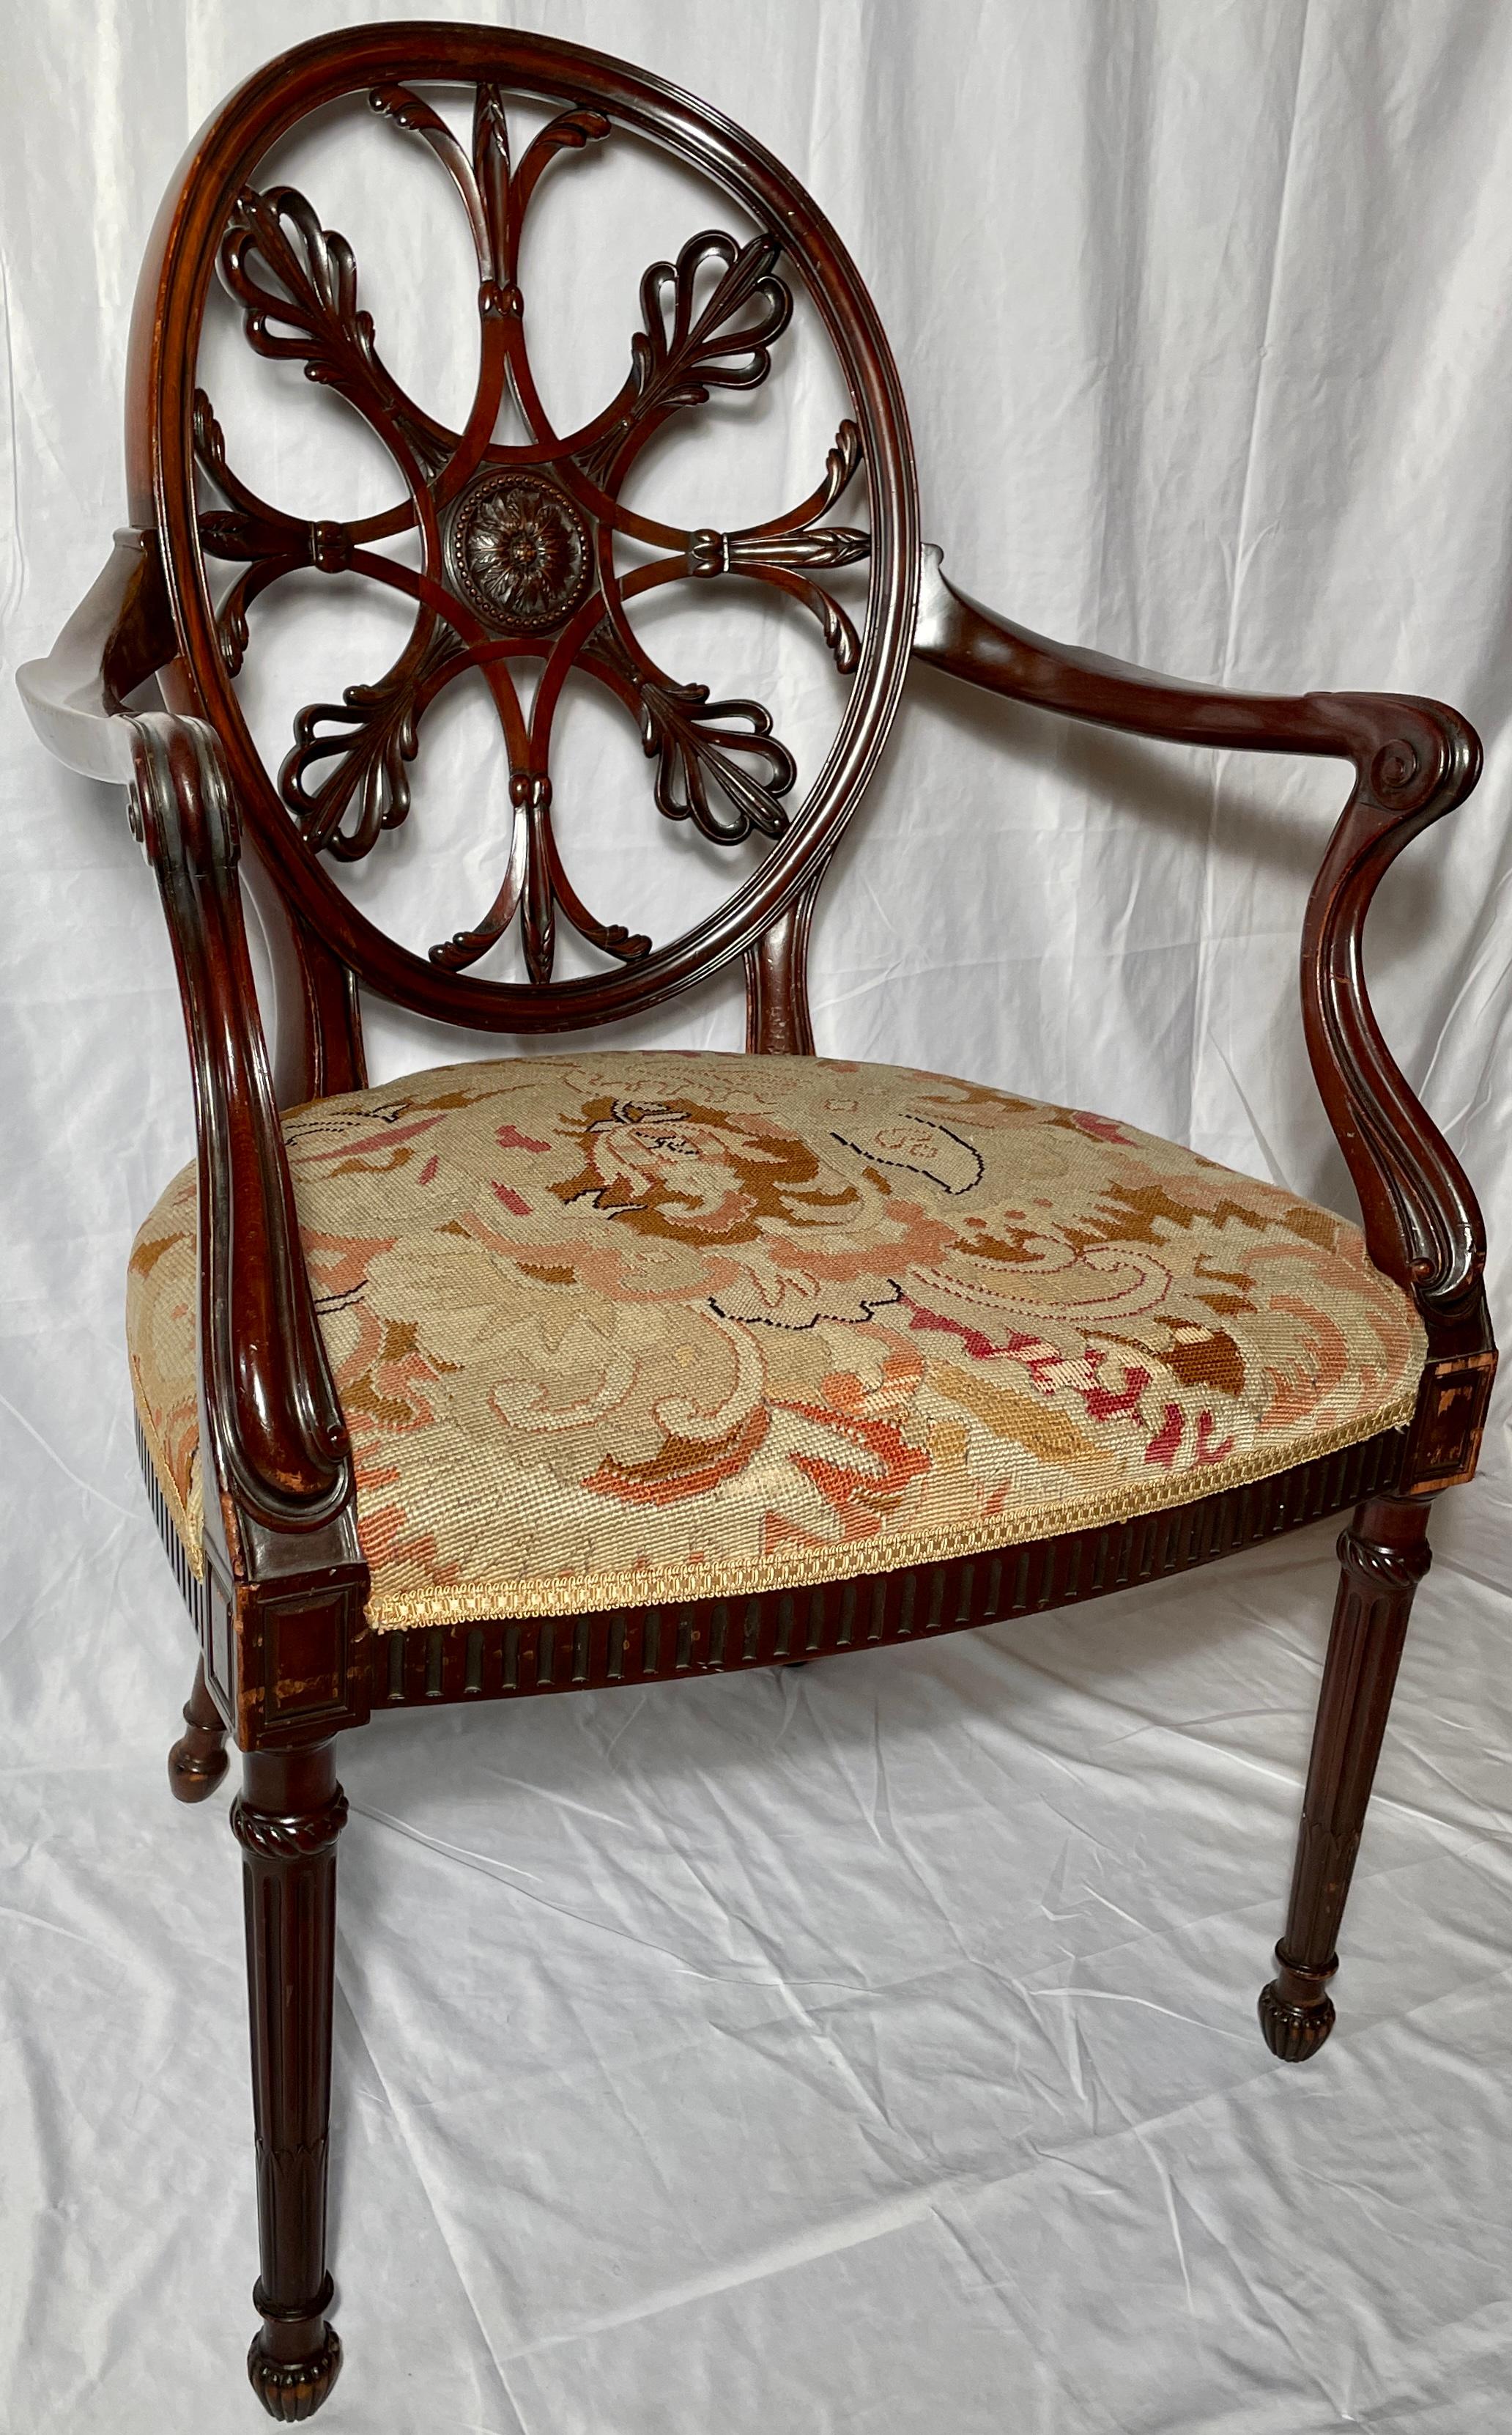 Antique English Hepplewhite round back arm chair, circa 1880.